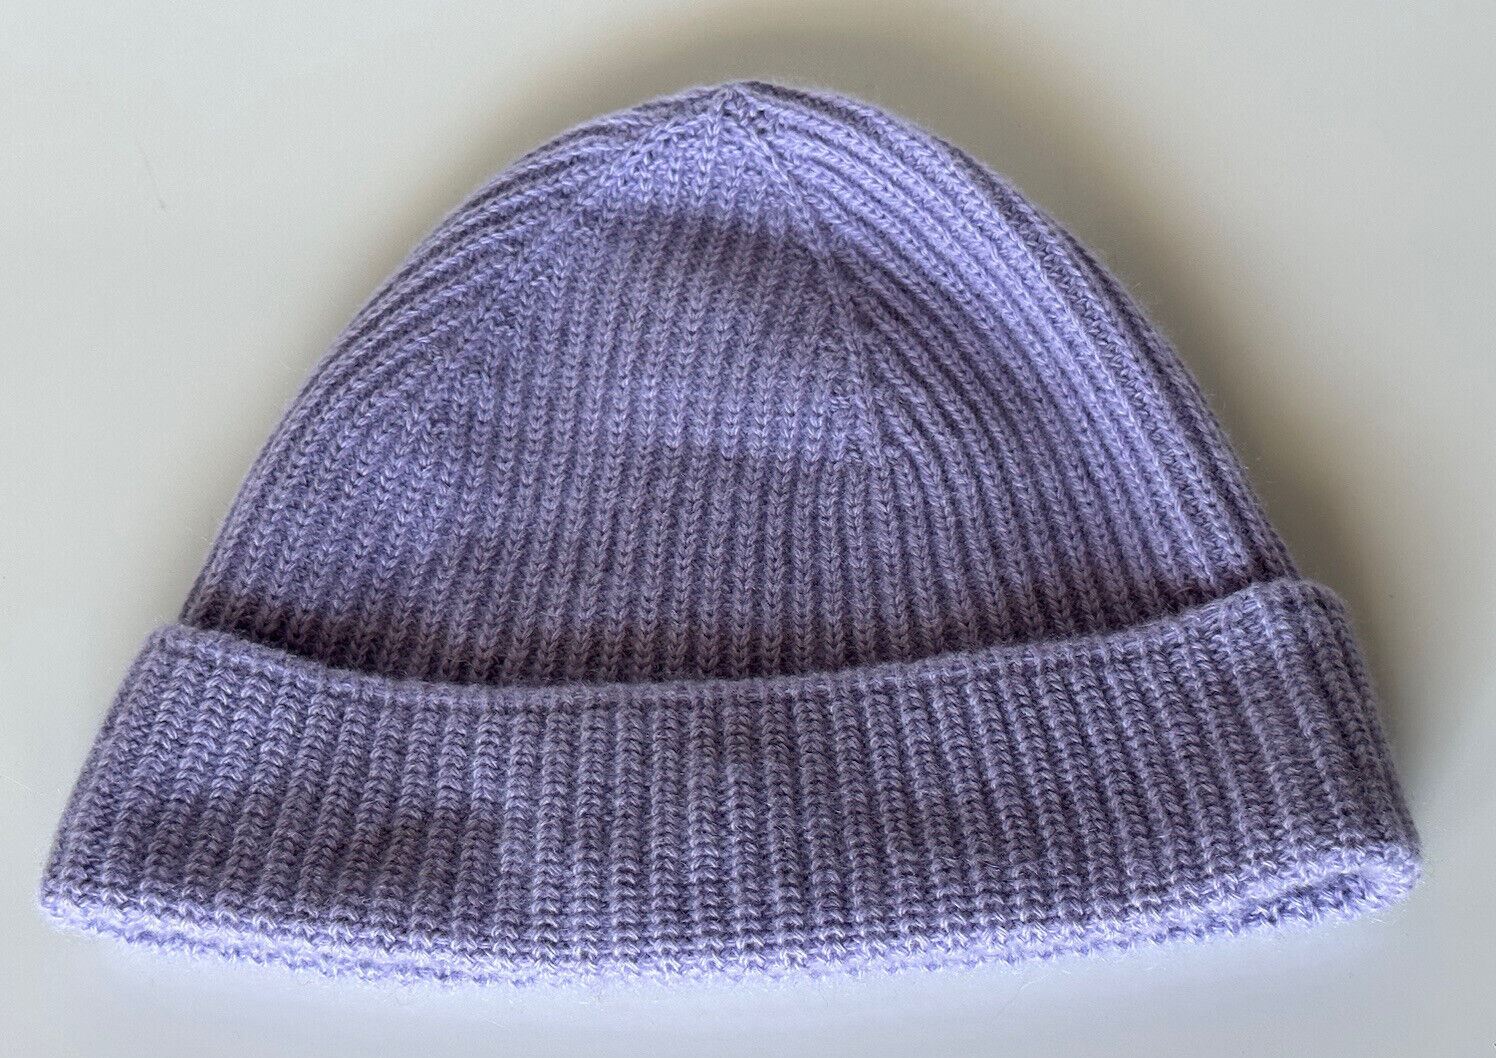 NWT $425 Versace Medusa Knit Beanie Светло-фиолетовая кашемировая шапка 1001616 Италия 